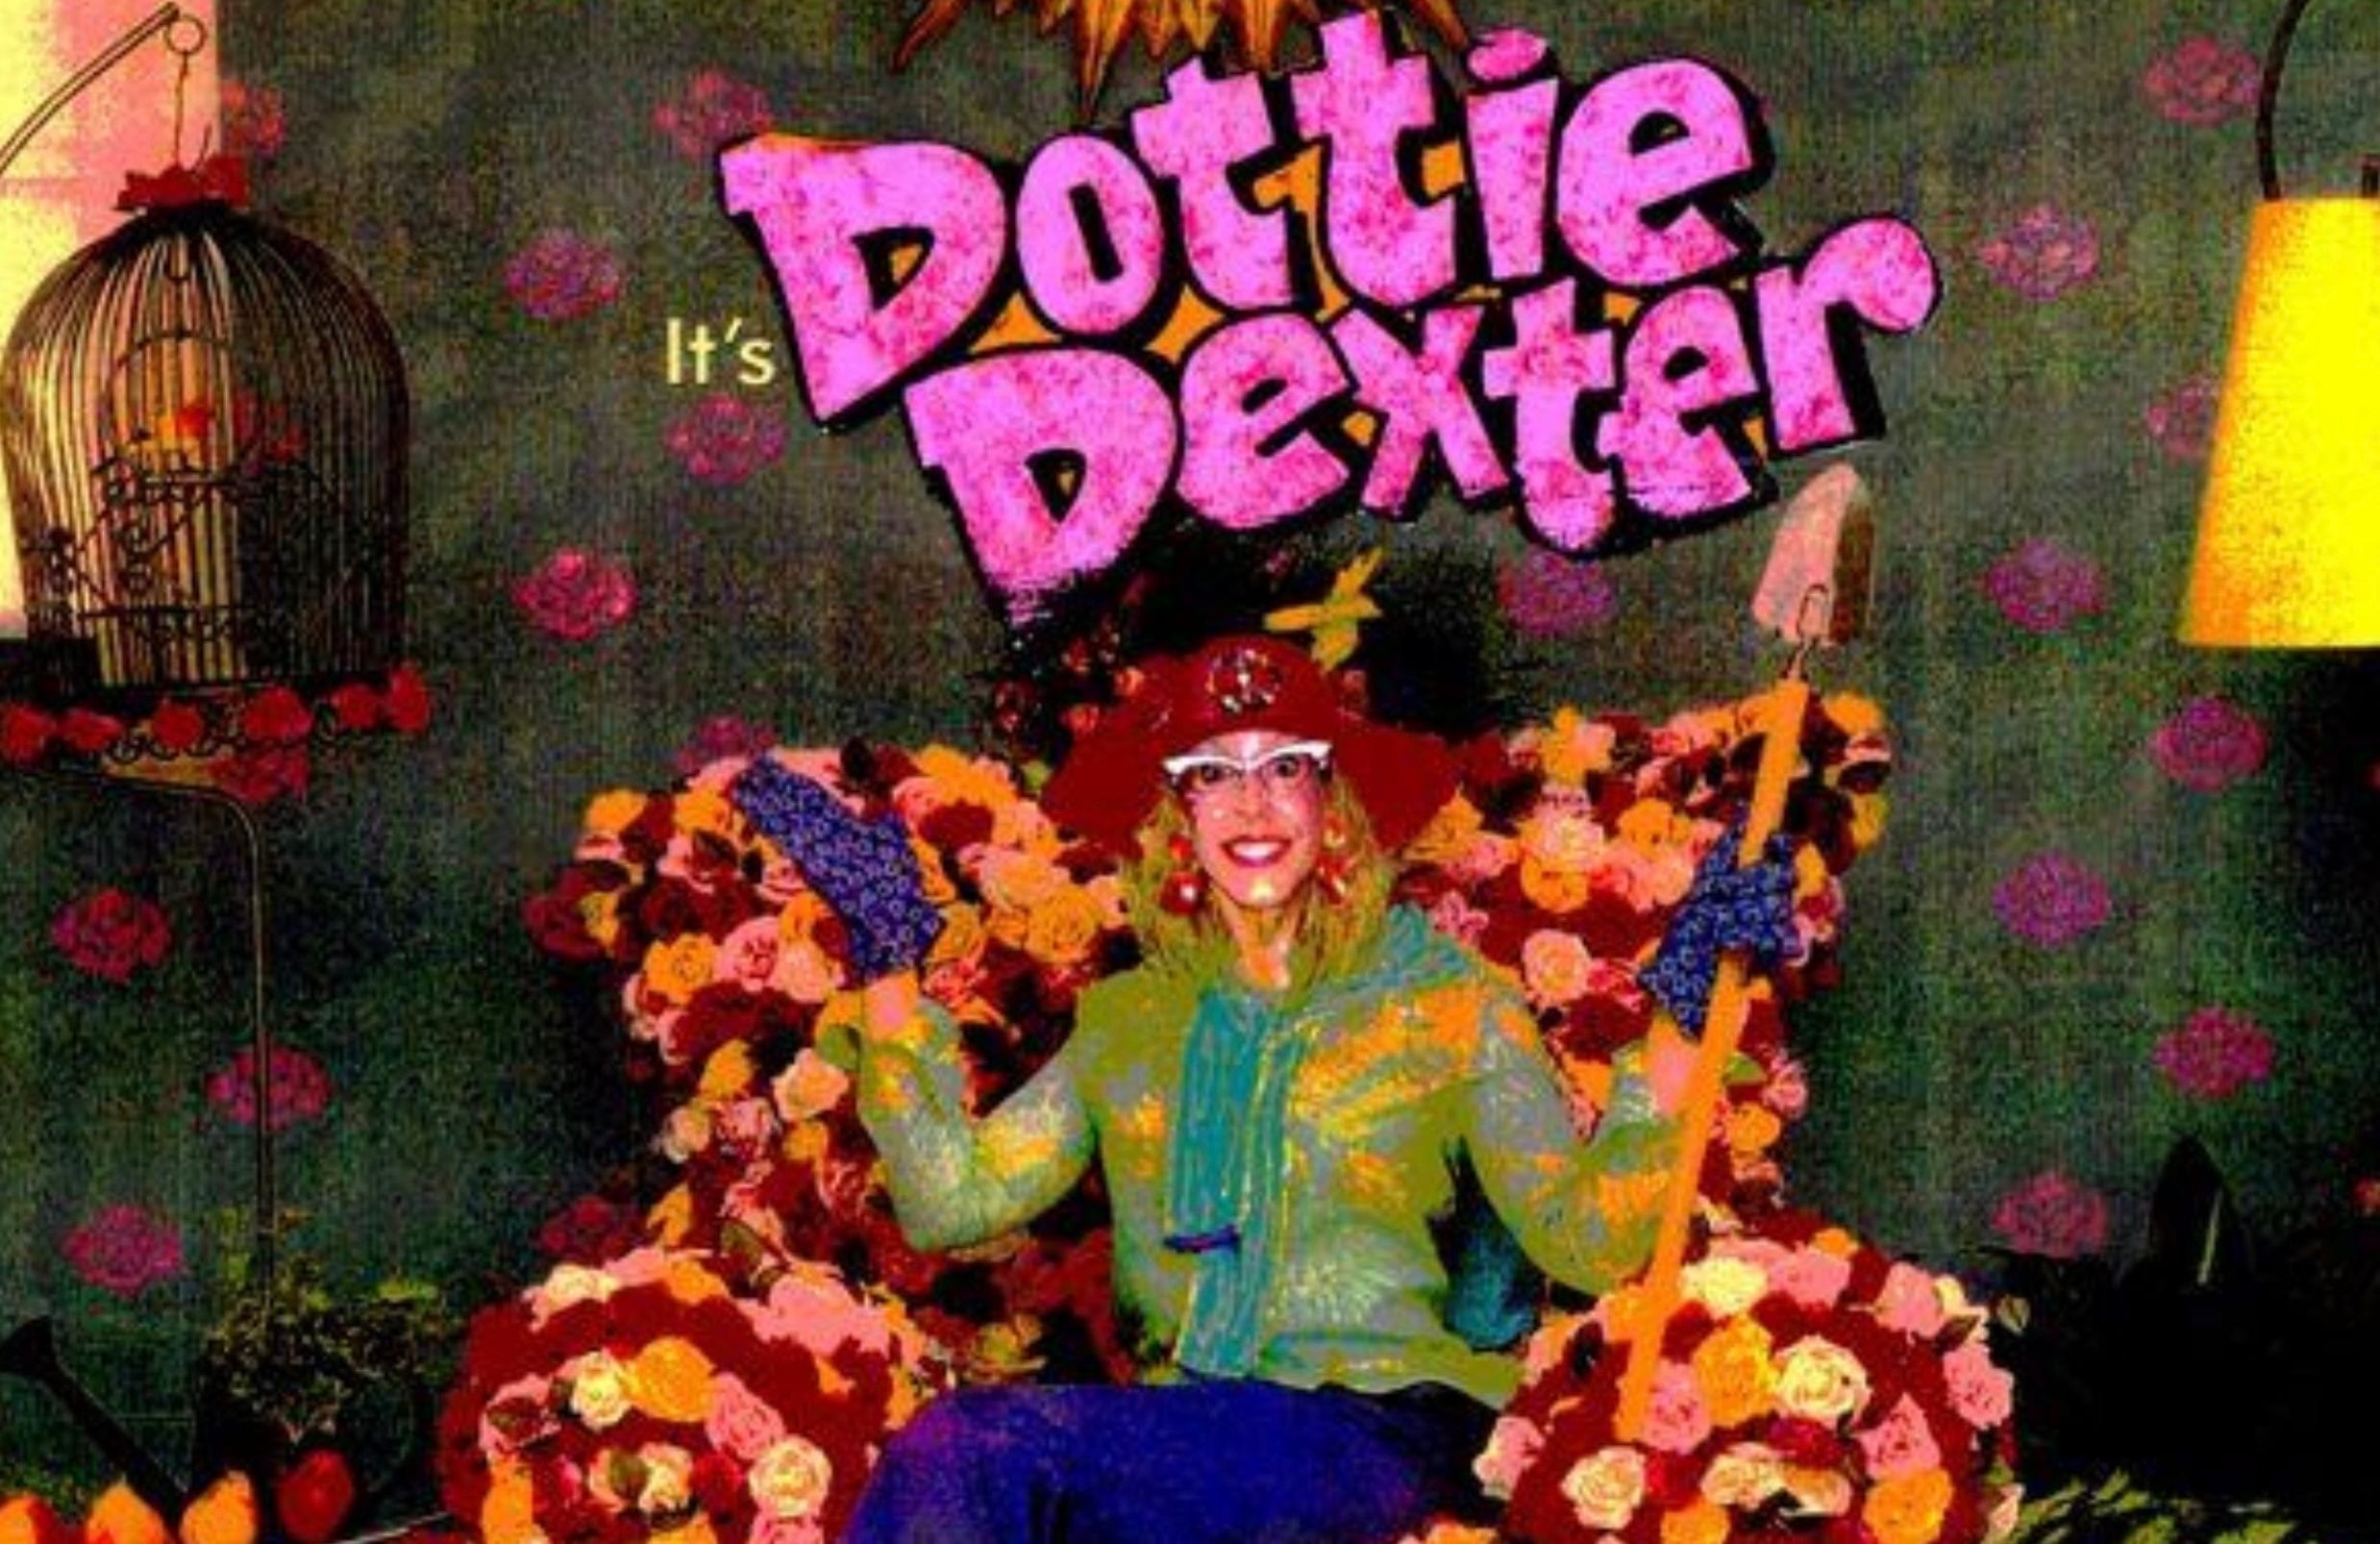 Dottie Dexter garden TV segment, shovel, garden gloves, flowers, chair,